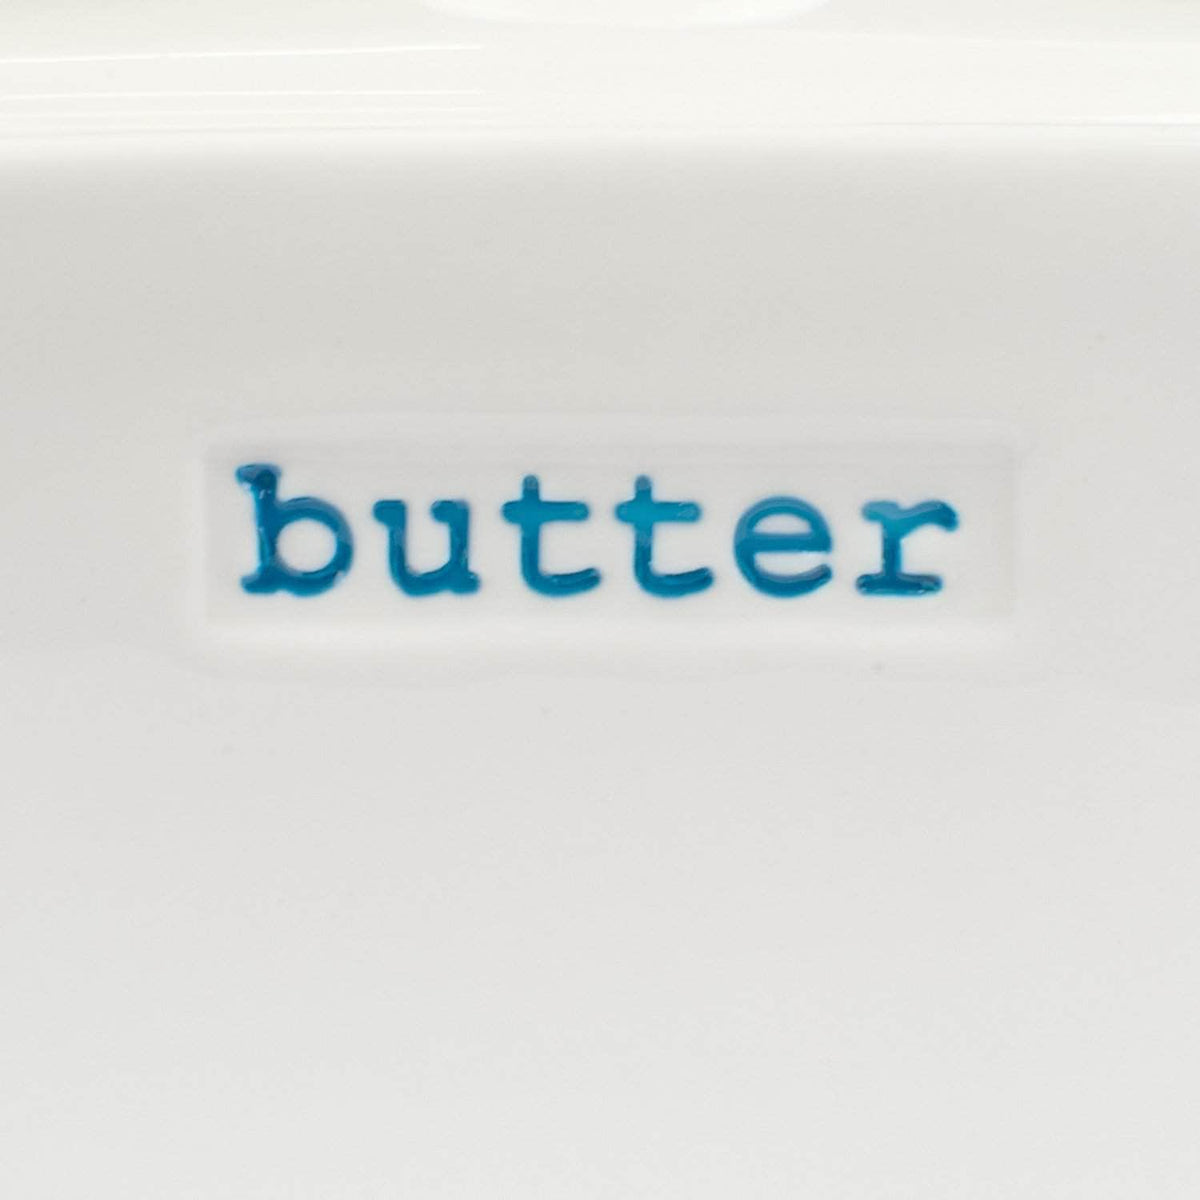 *New* Keith Brymer Jones butter dish